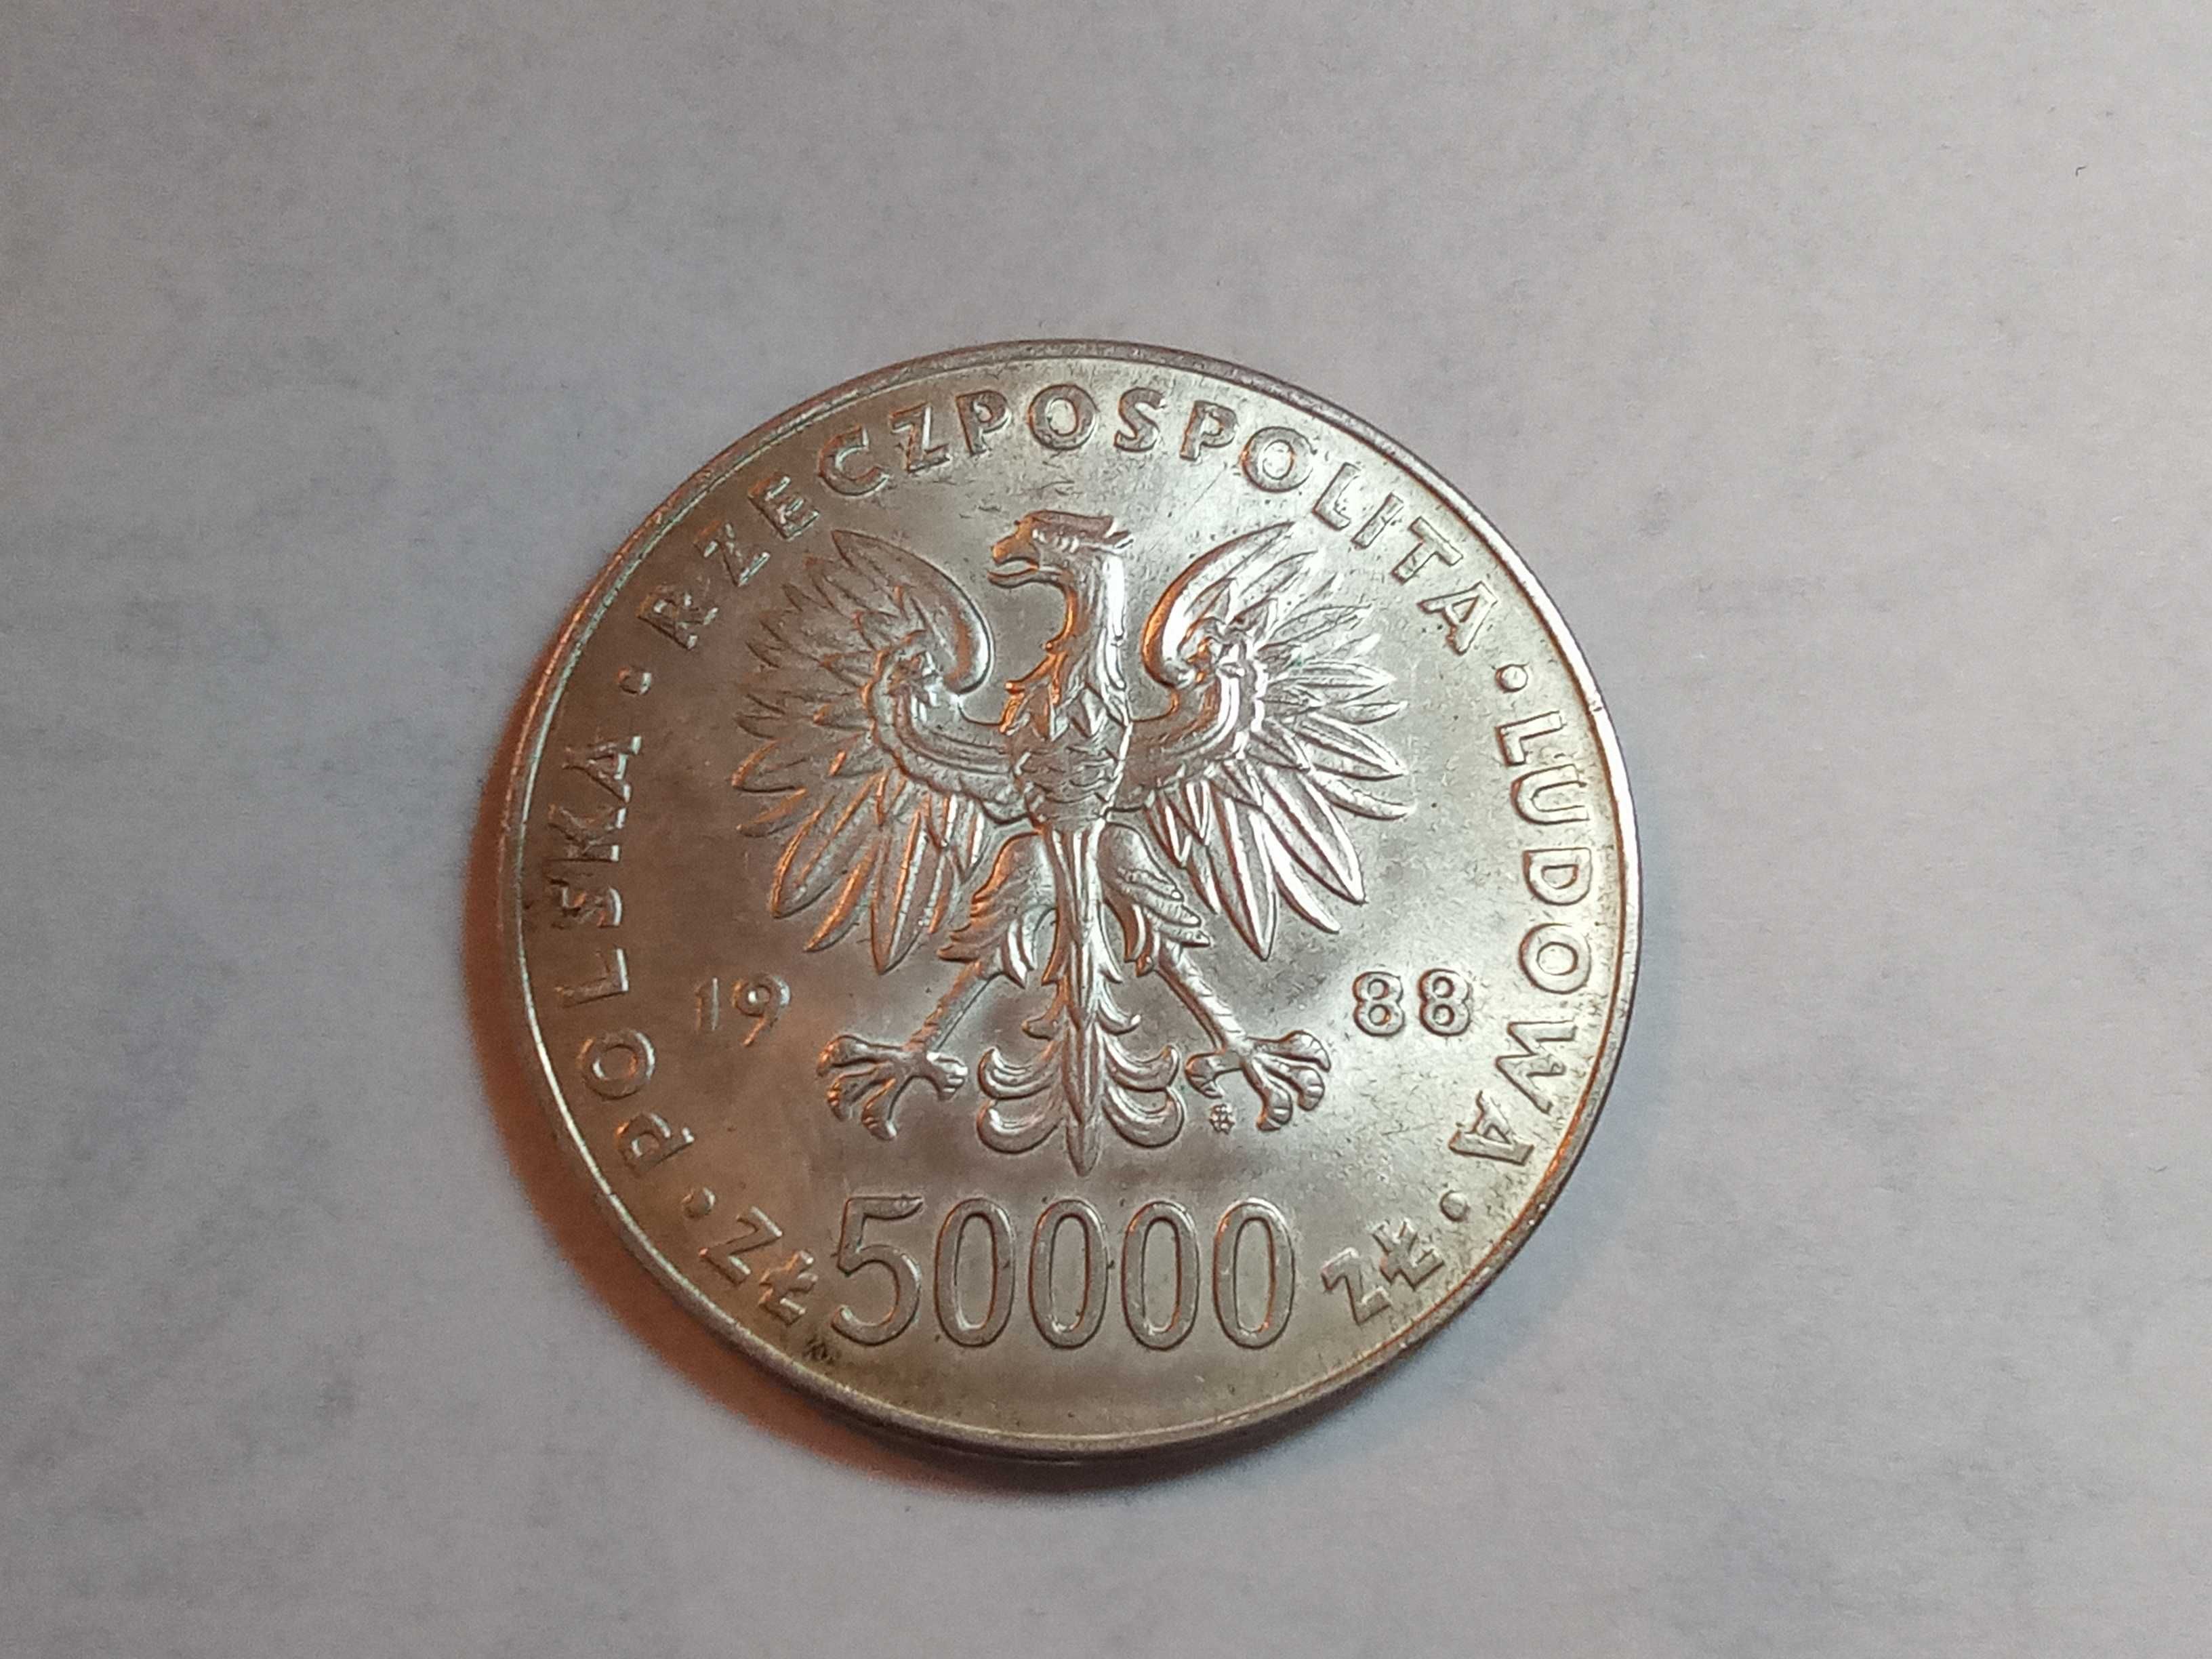 Moneta Piłsudski 50 000 zł z 1988 roku.